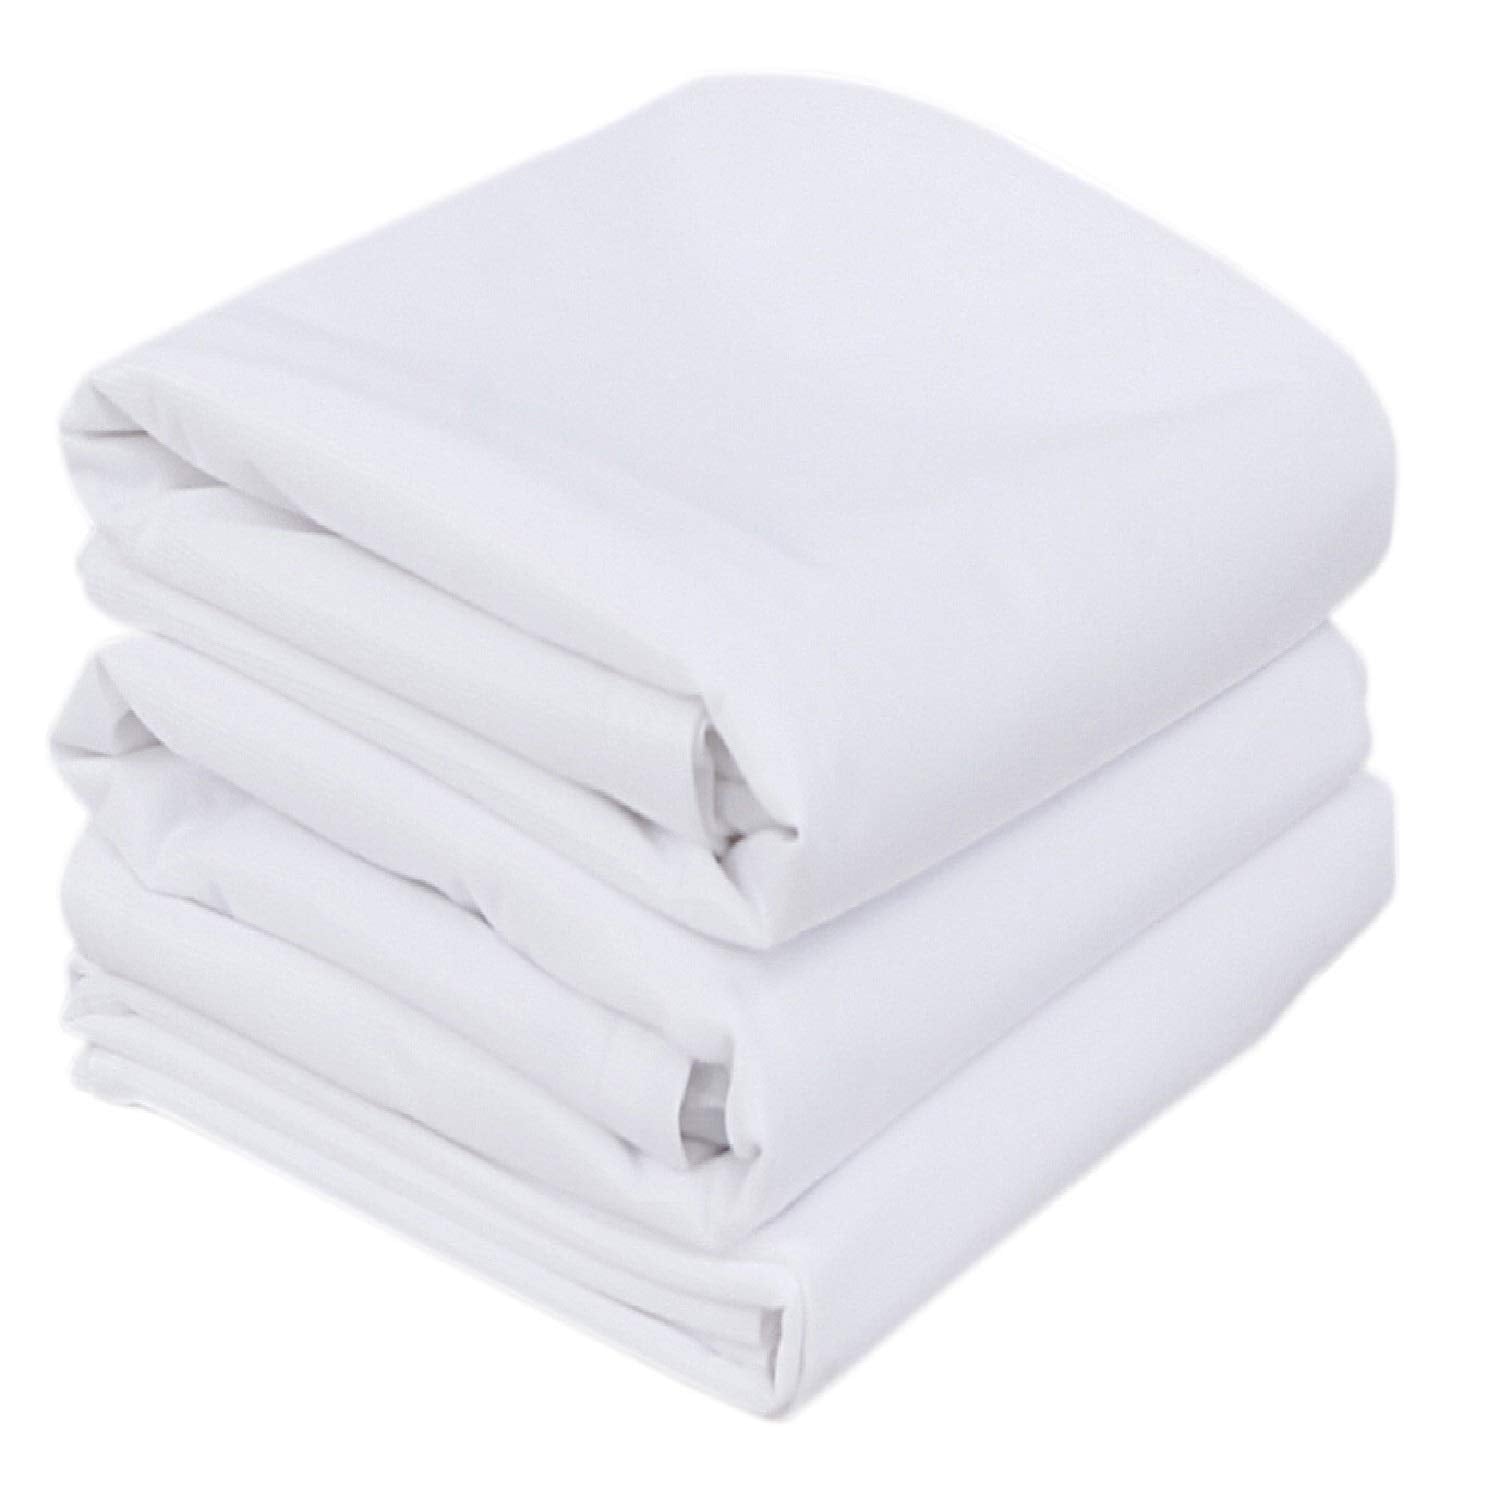 Niagara Sleep Solution Waterproof Pillow Protectors Niagara Sleep Solution